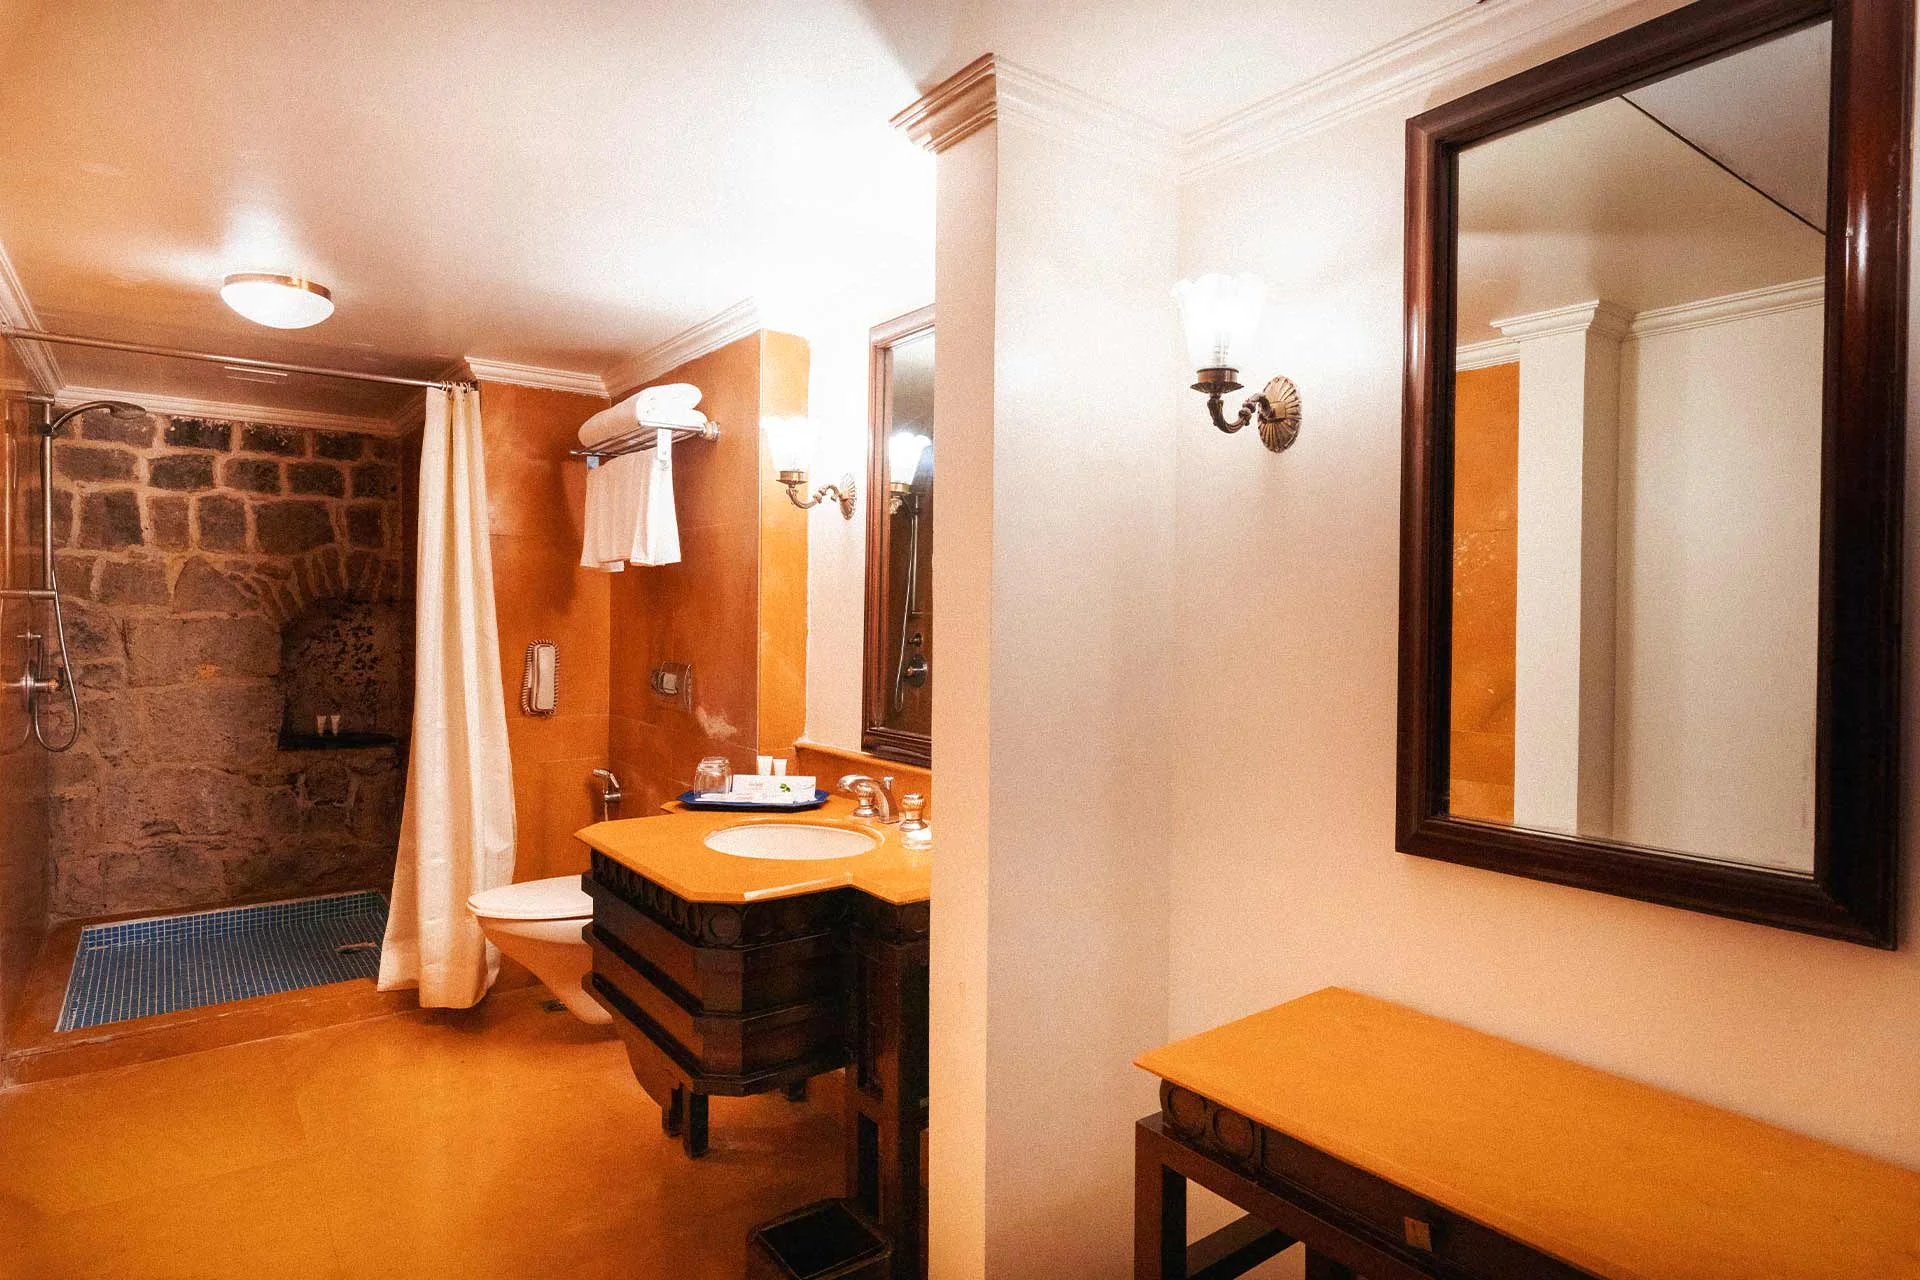 Kholi Deluxe Room at Fort JadhavGADH, Heritage Resort near Pune